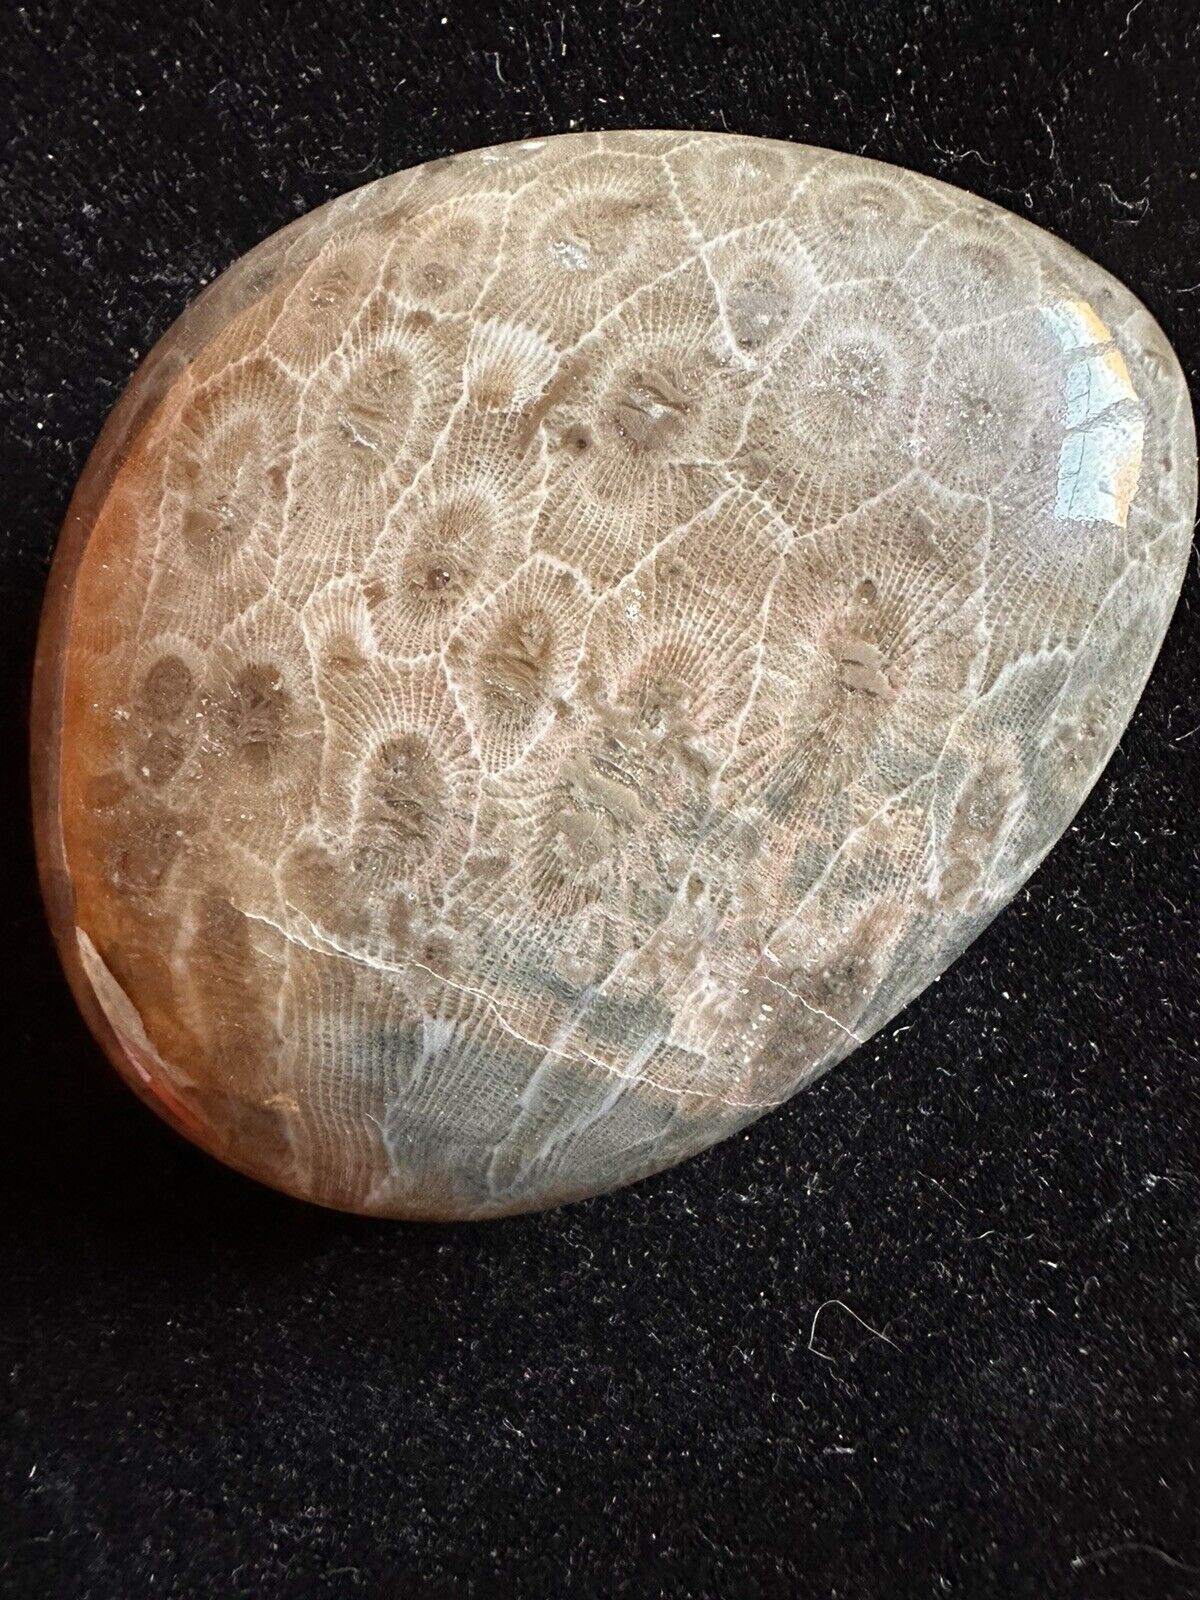 Hand polished Petoskey Stone,Rare Pink/blueSemi precious, treasure, gift, fossil